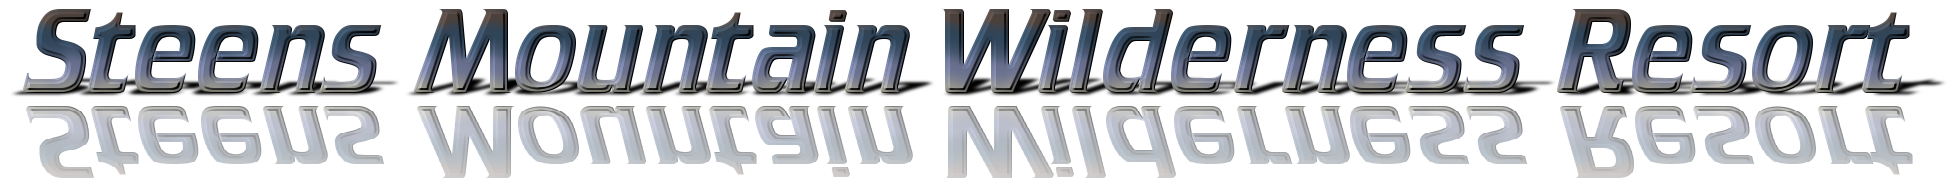 SMWR Logo